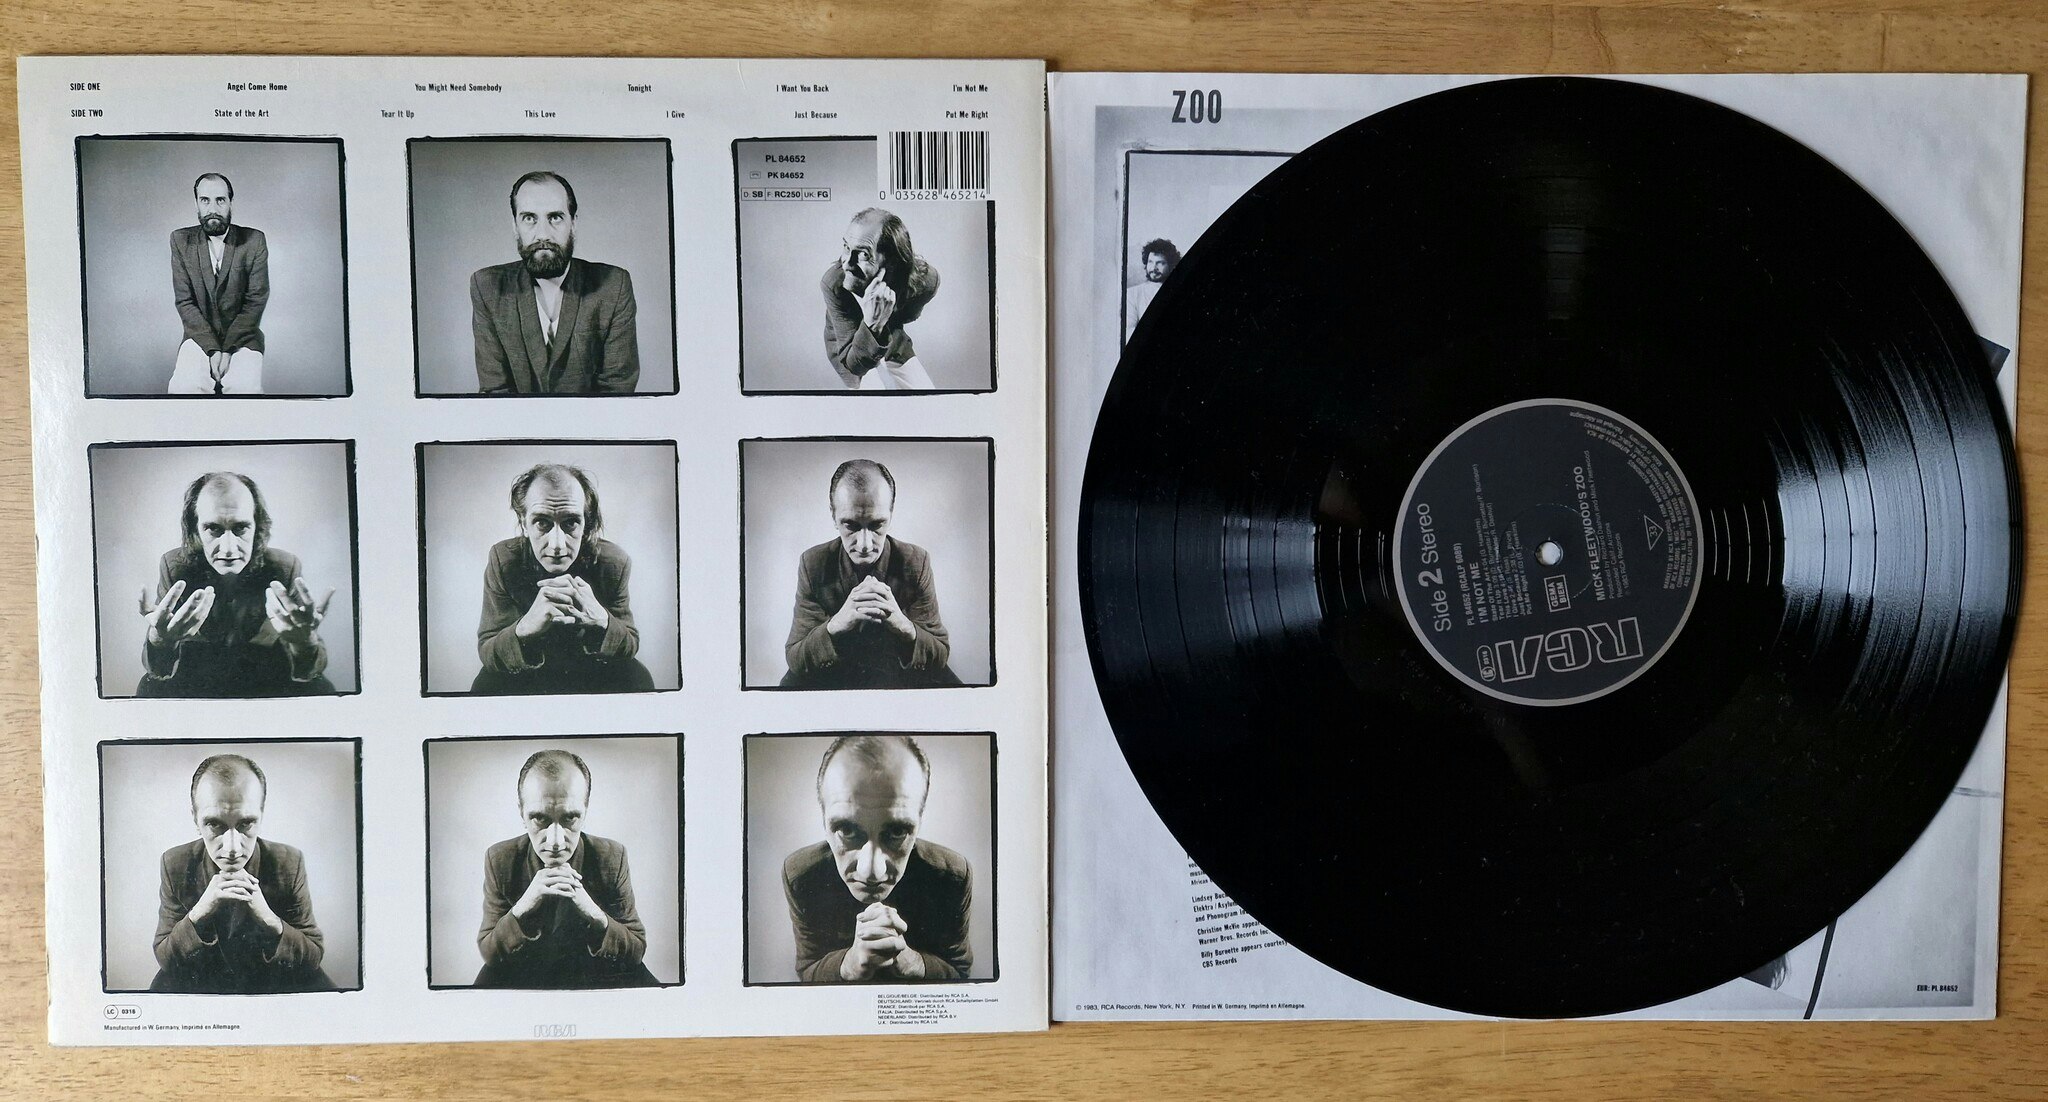 Mick Fleetwood's Zoo, I'm not me. Vinyl LP